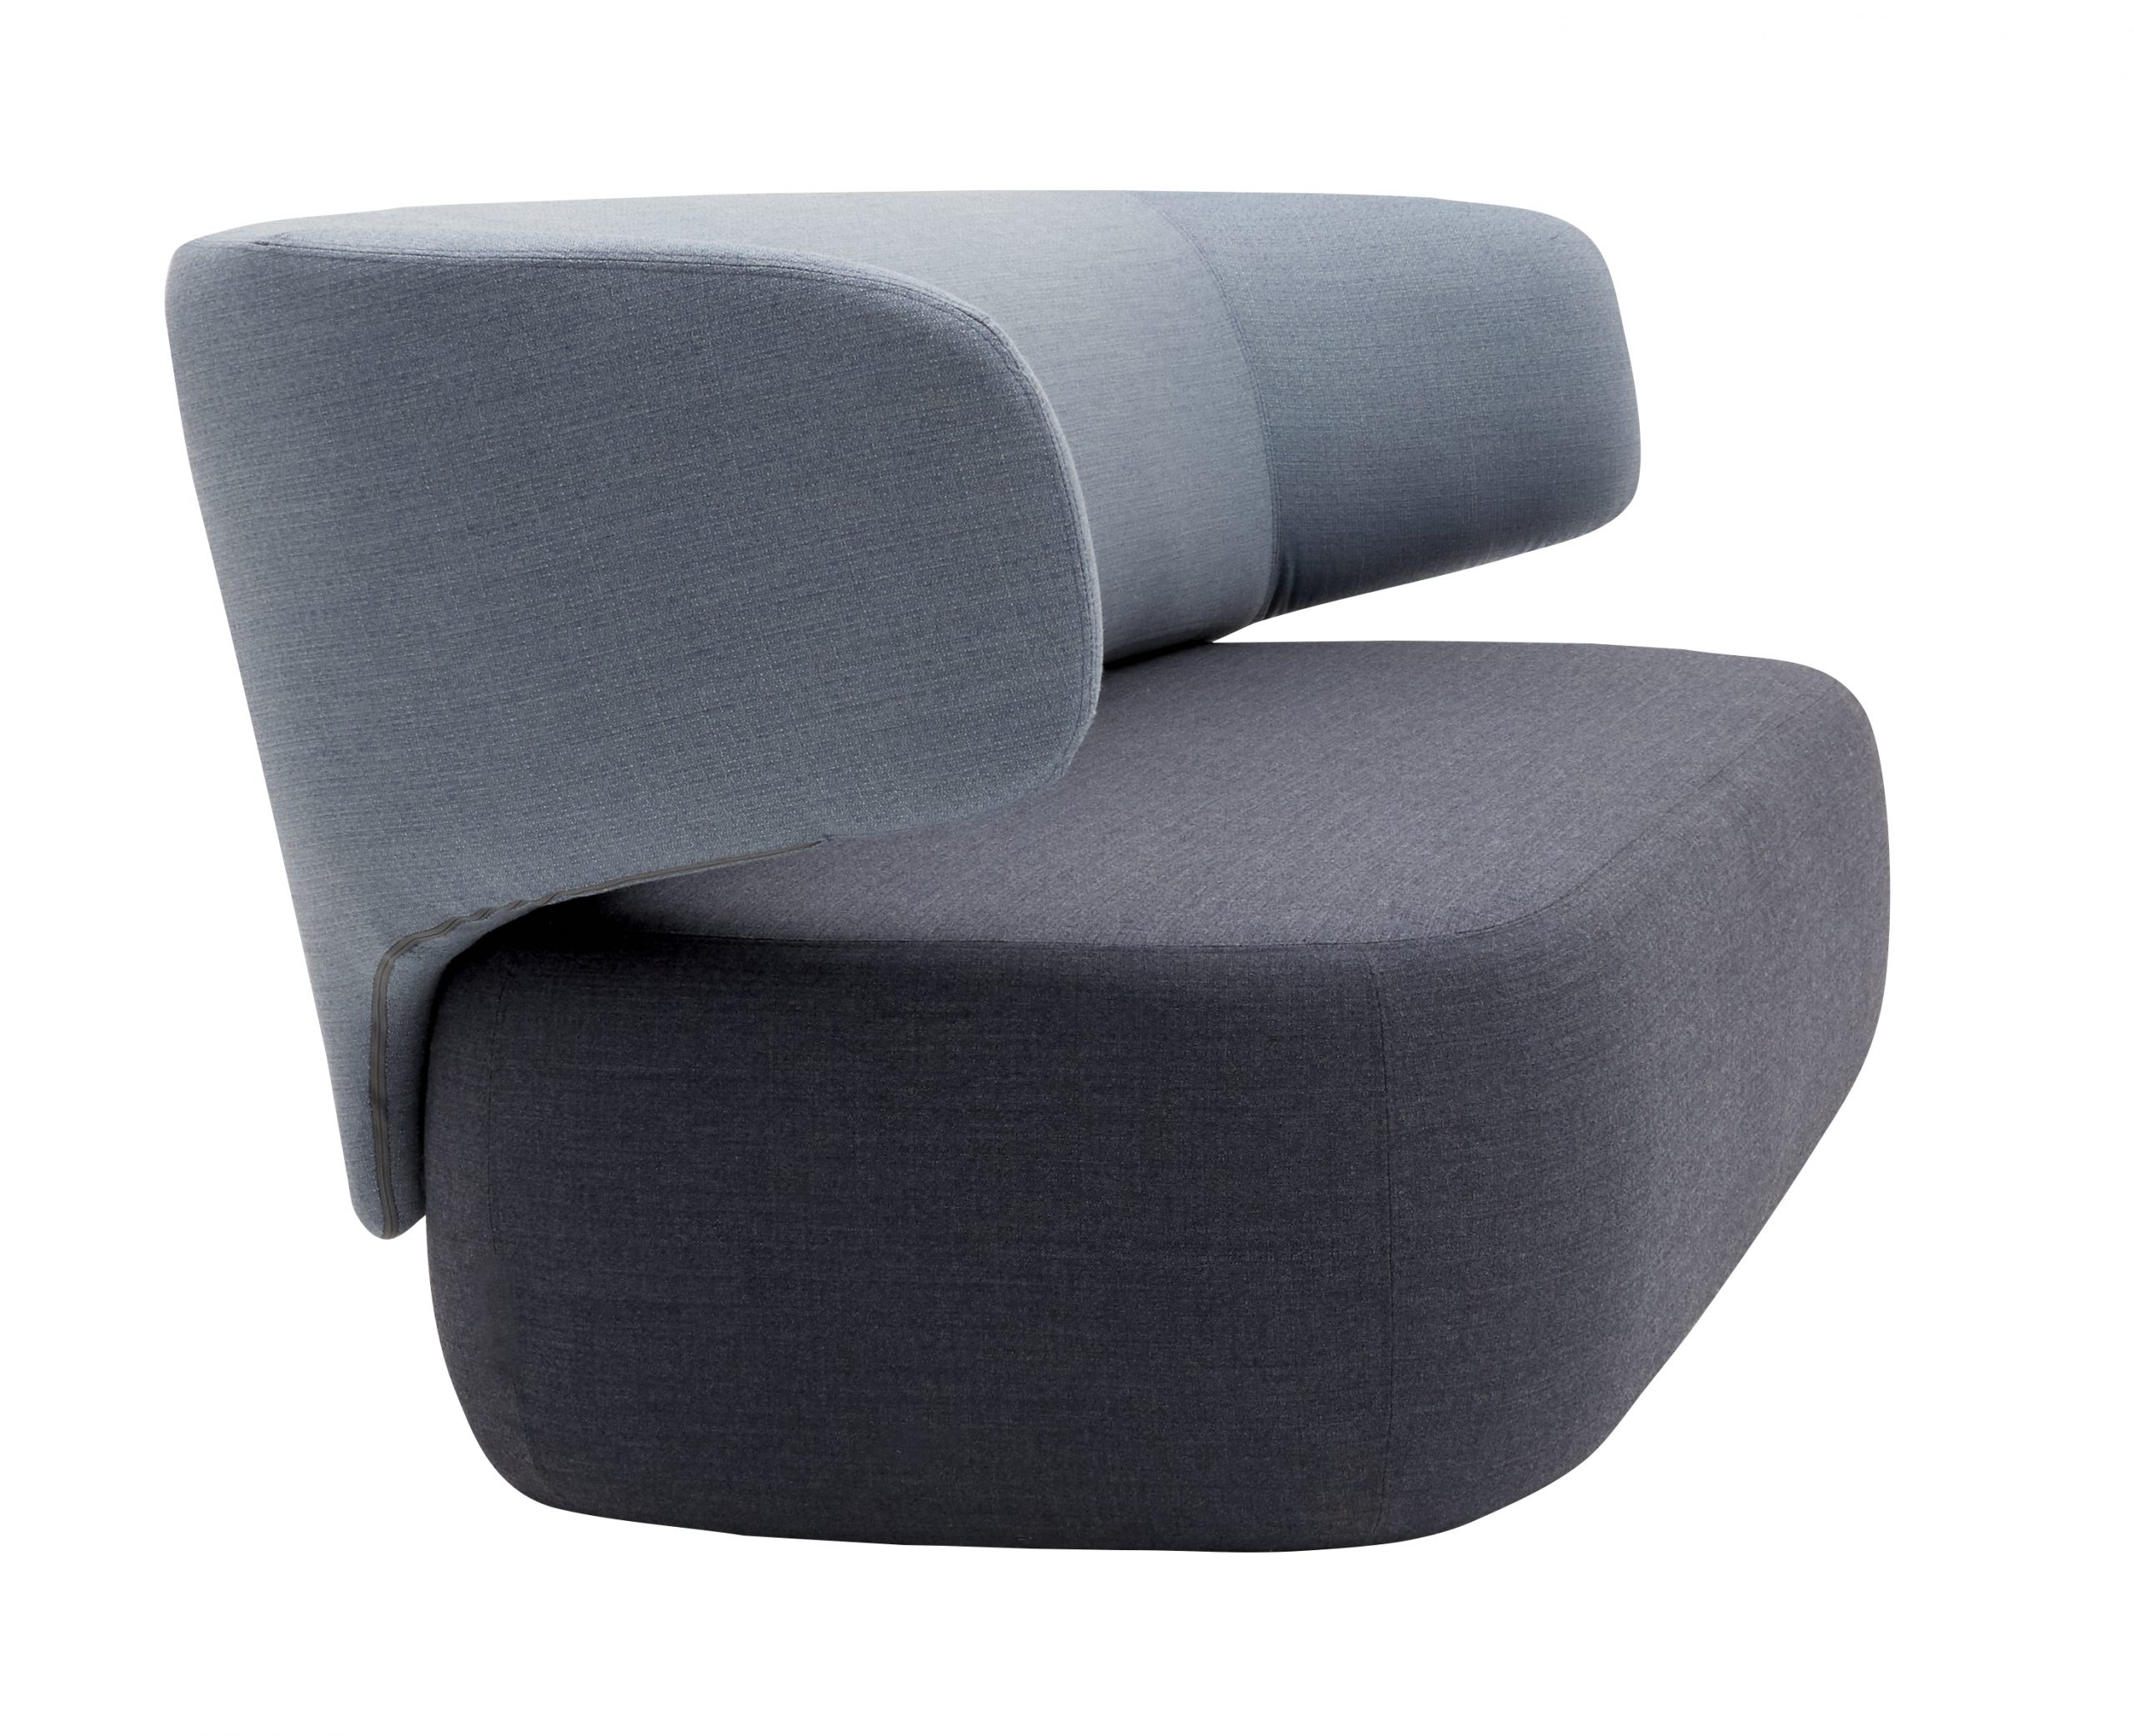 basel-sofa-chair-high-res-05-scaled.jpg